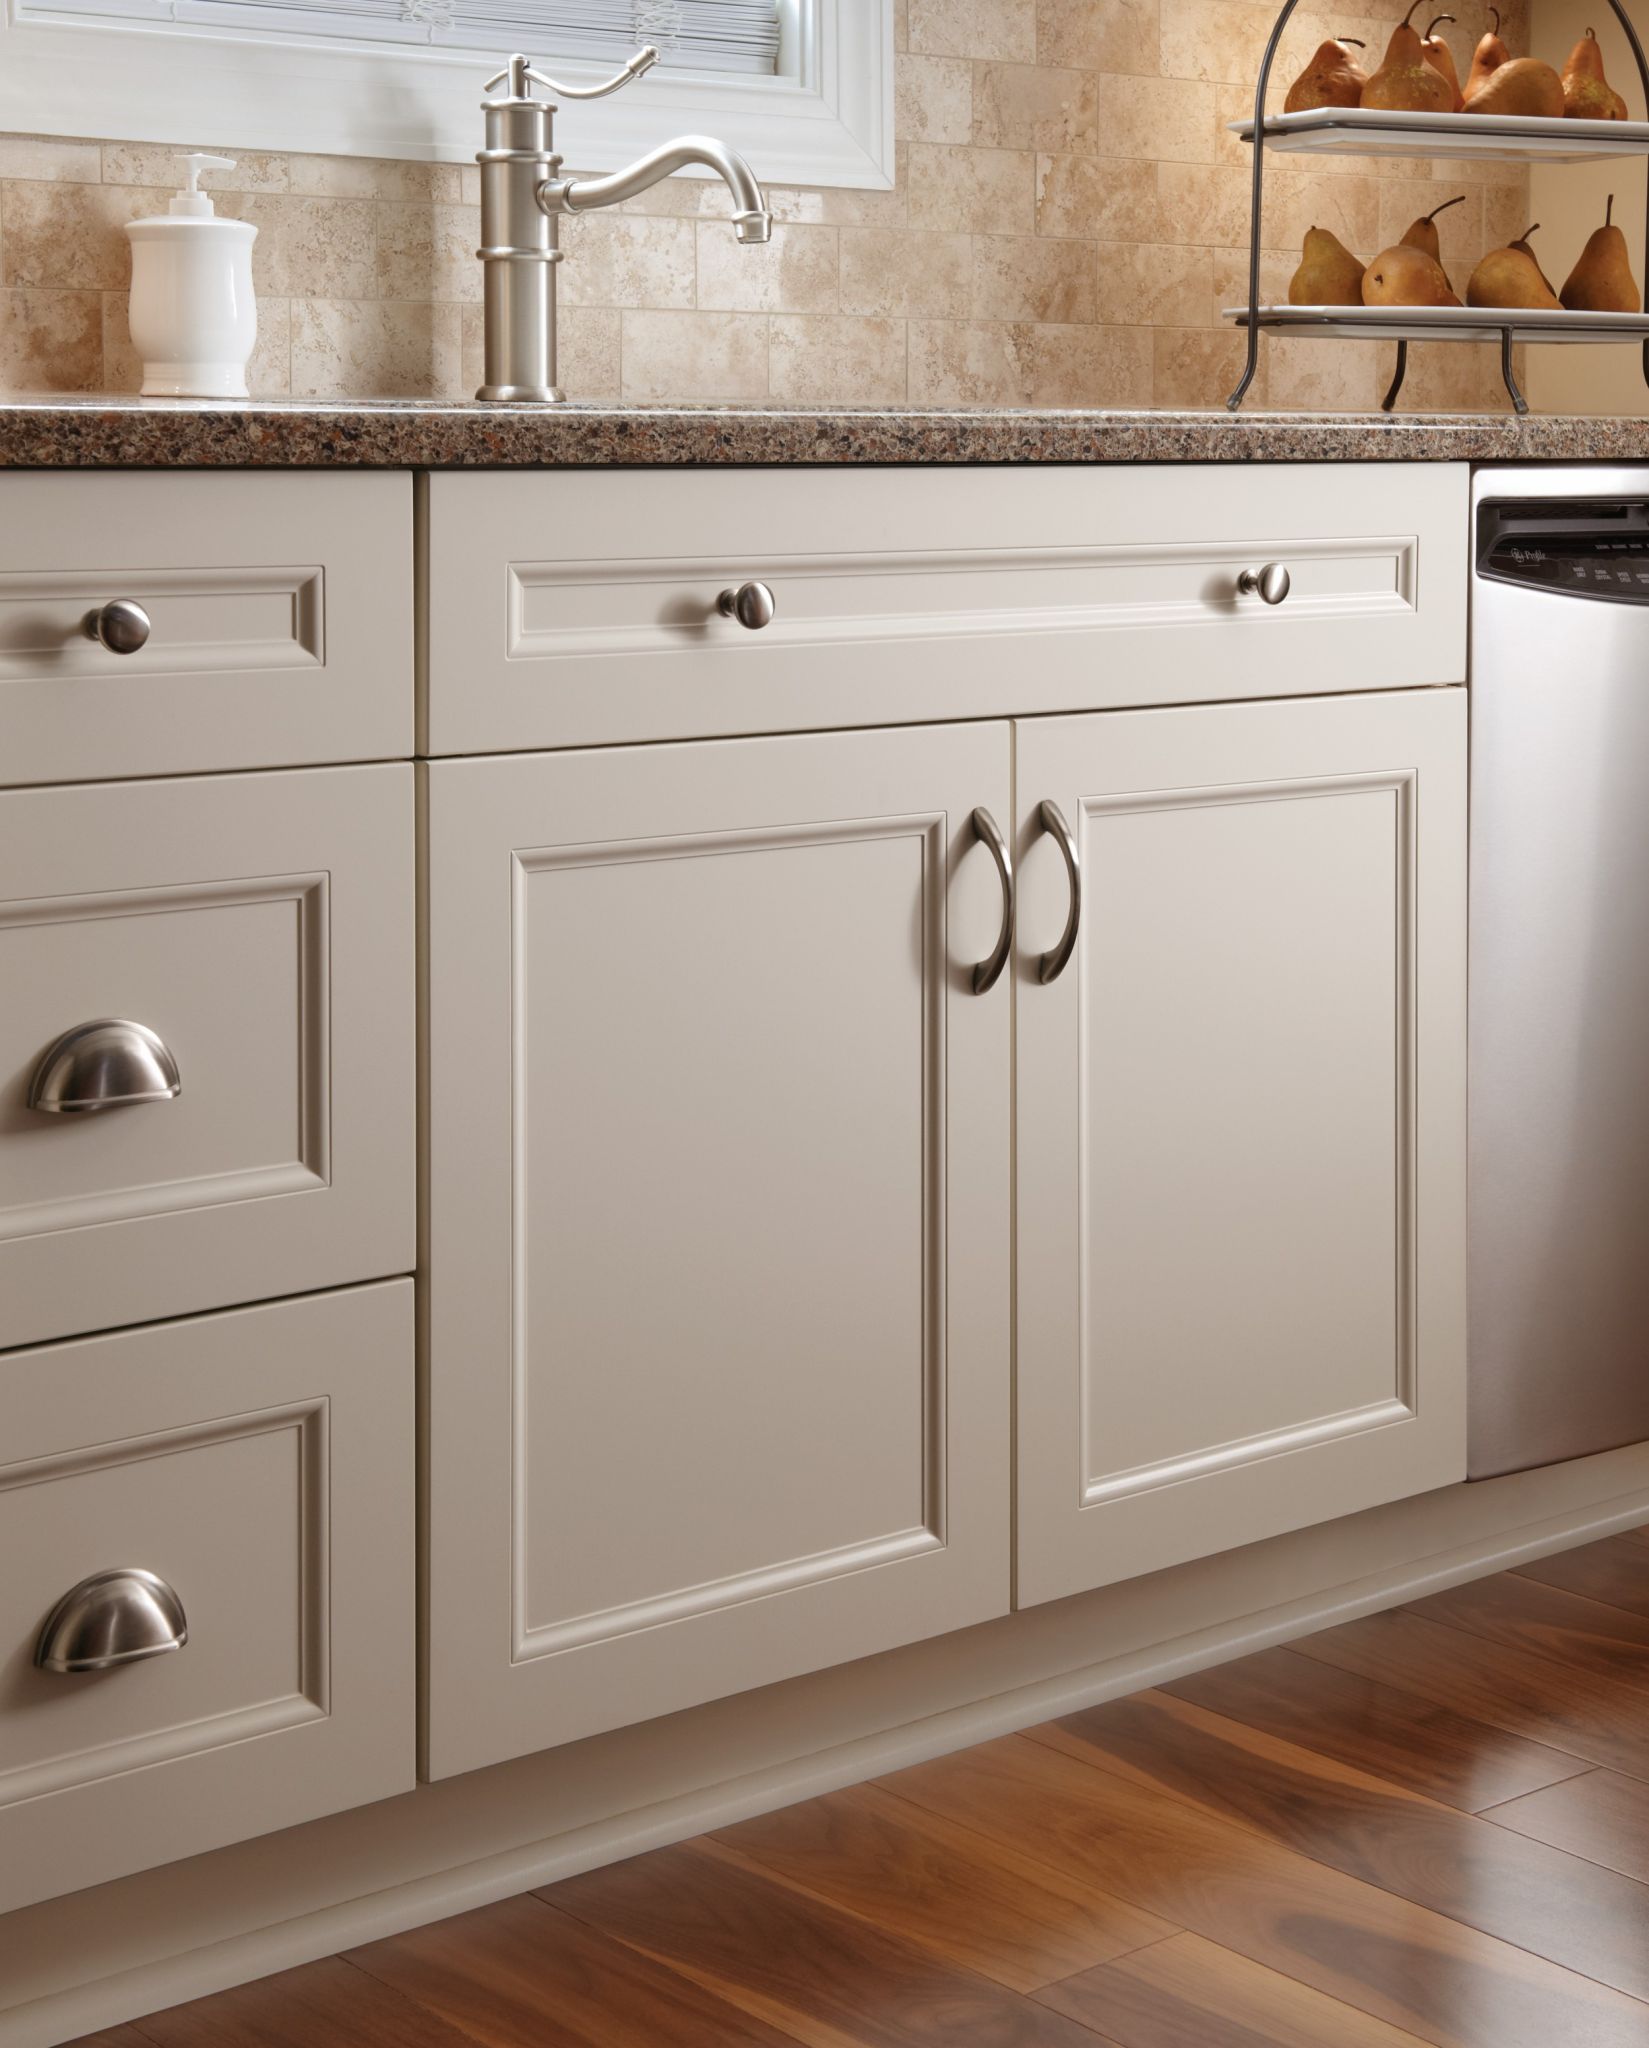 Cabinet Hardware Placement Bkc, Kitchen Cabinet Hardware Ideas 2019